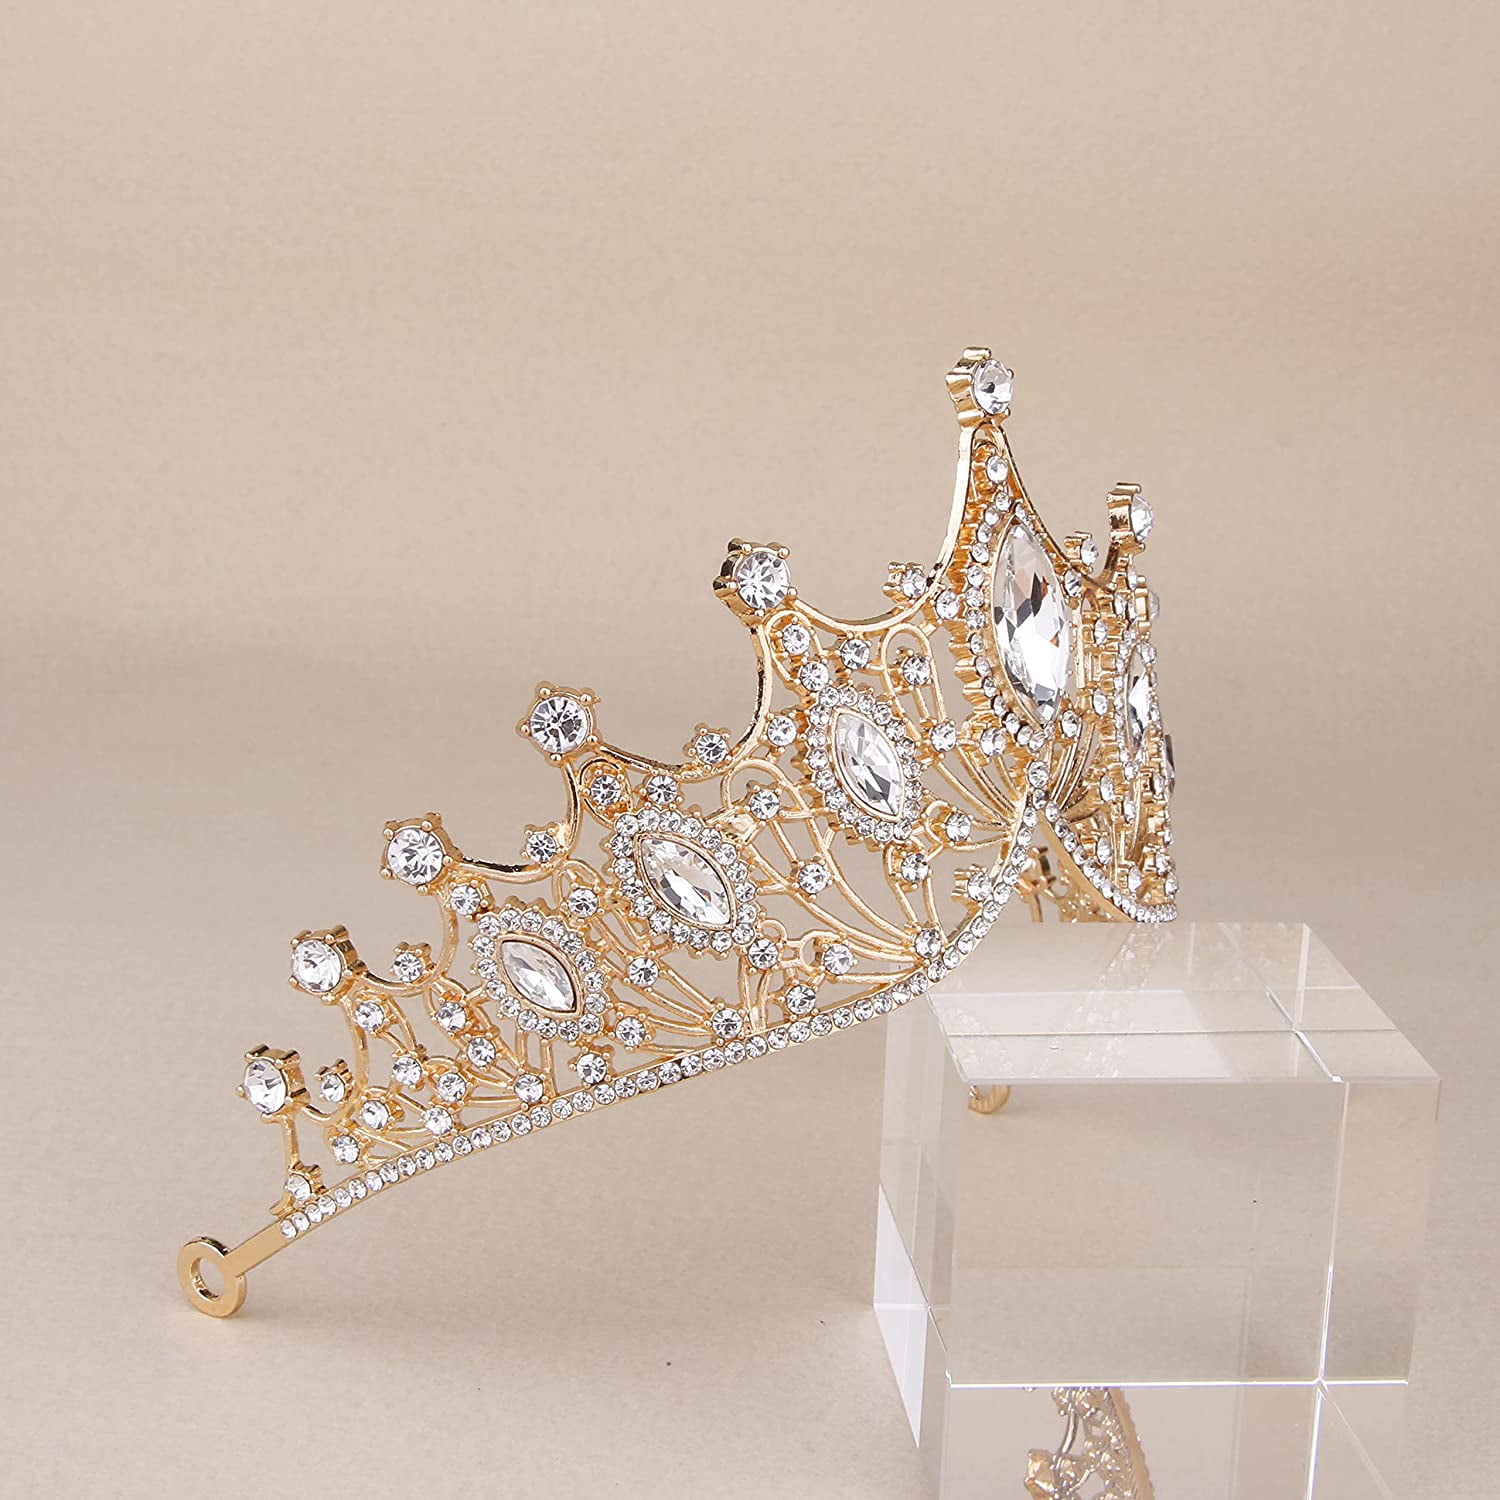 Crowns for Women, Gold Tiaras - Baroque Medieval Renaissance Crystal  Headband for Queen Bride Princess Girl Birthday Festival Halloween Costumes  